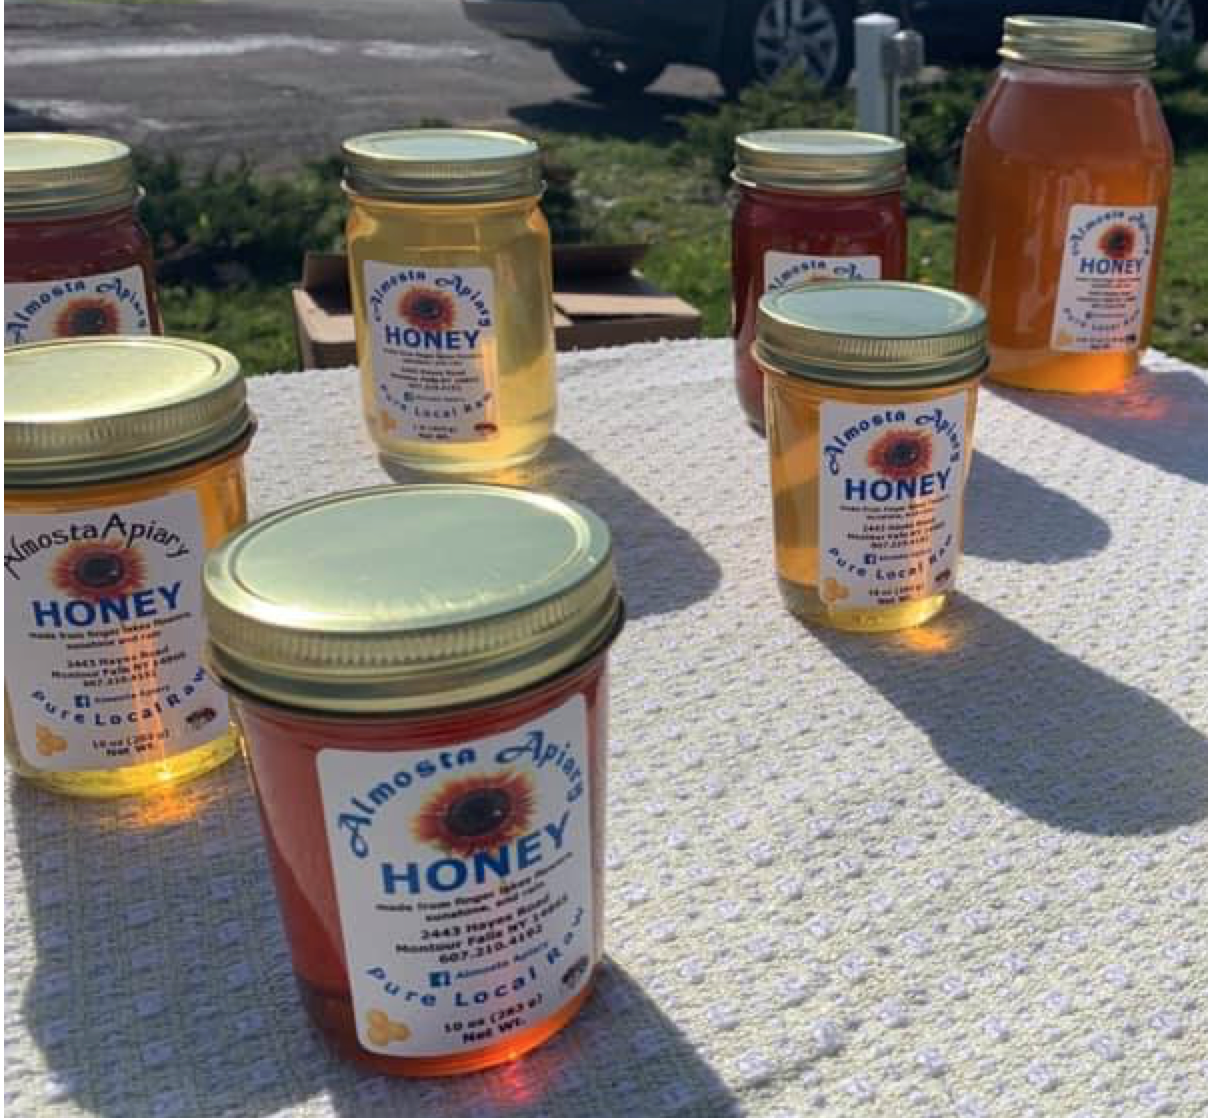 Almosta Apiary Dark Honey in 2 lb 12 oz "Quart" Jar